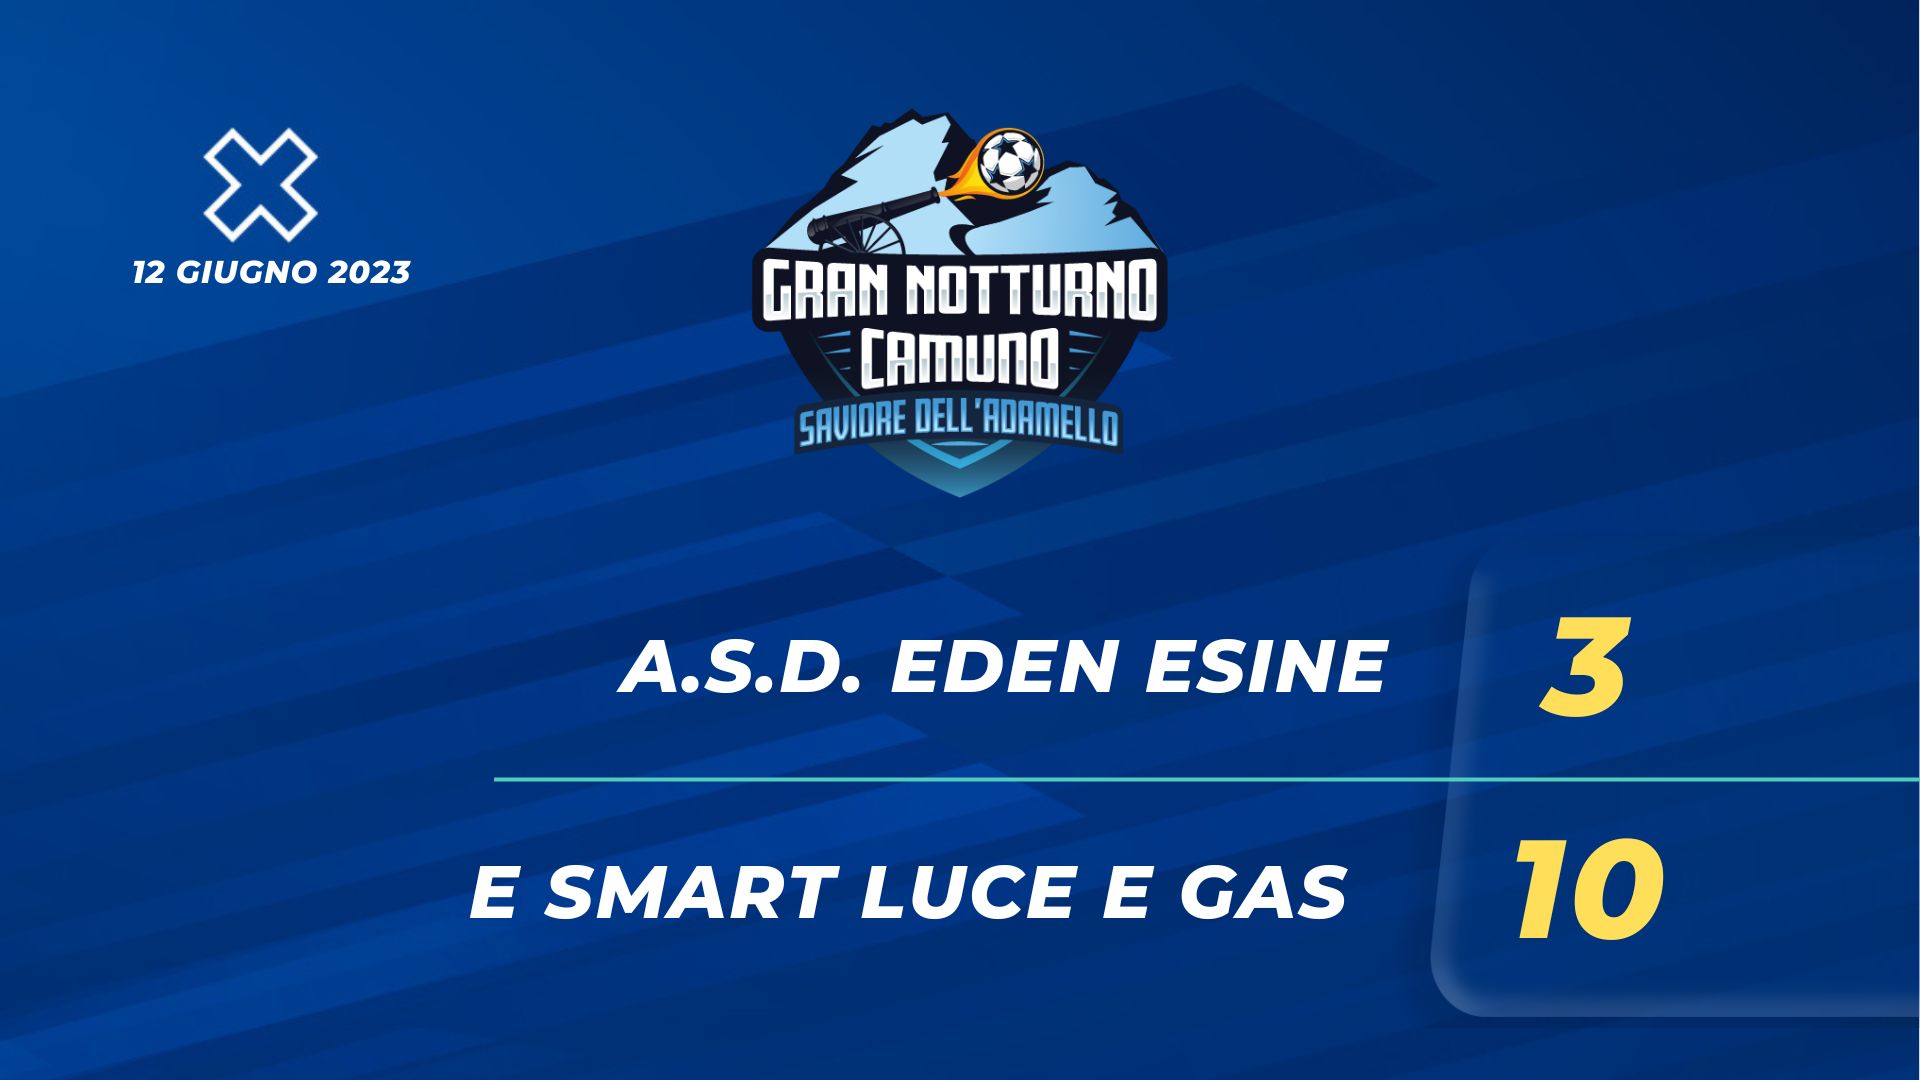 A.S.D. EDEN ESINE - E SMART LUCE E GAS 3 - 10